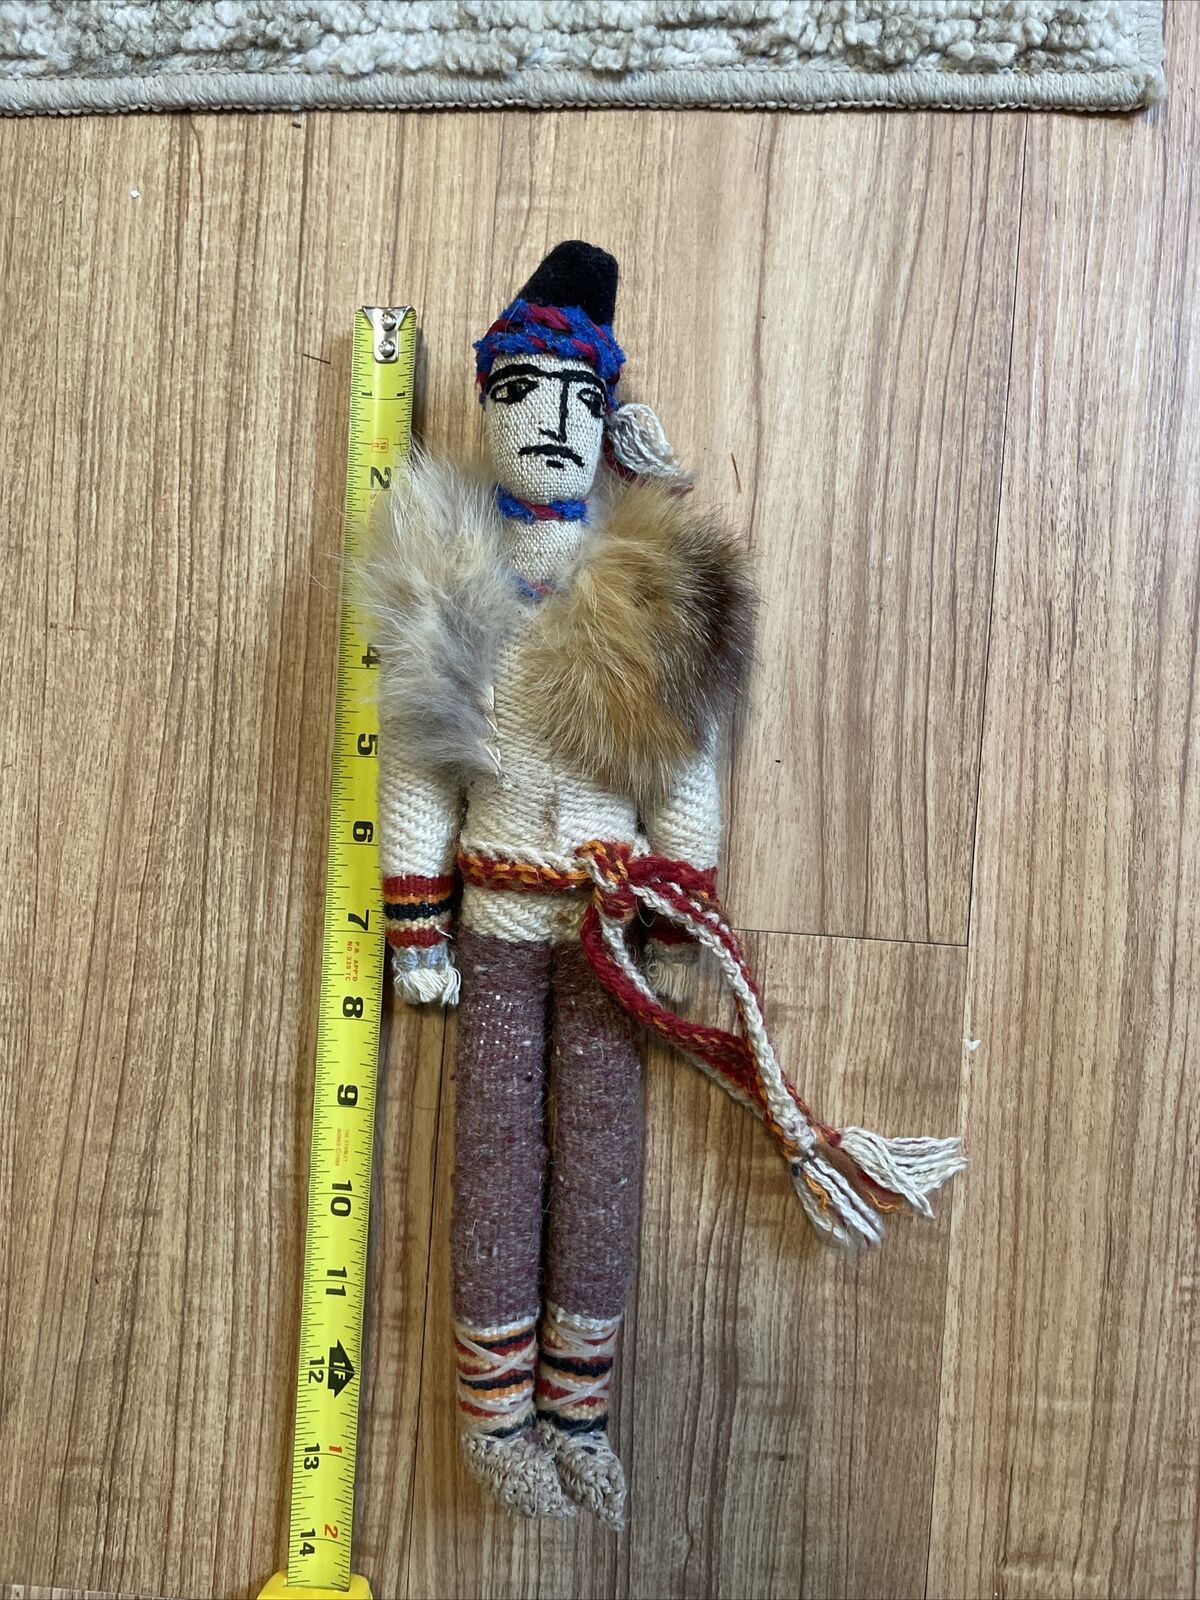 Hand Made Crocheted Arabic Armenian Middle Eastern Turkish Warrior Man Doll 14"